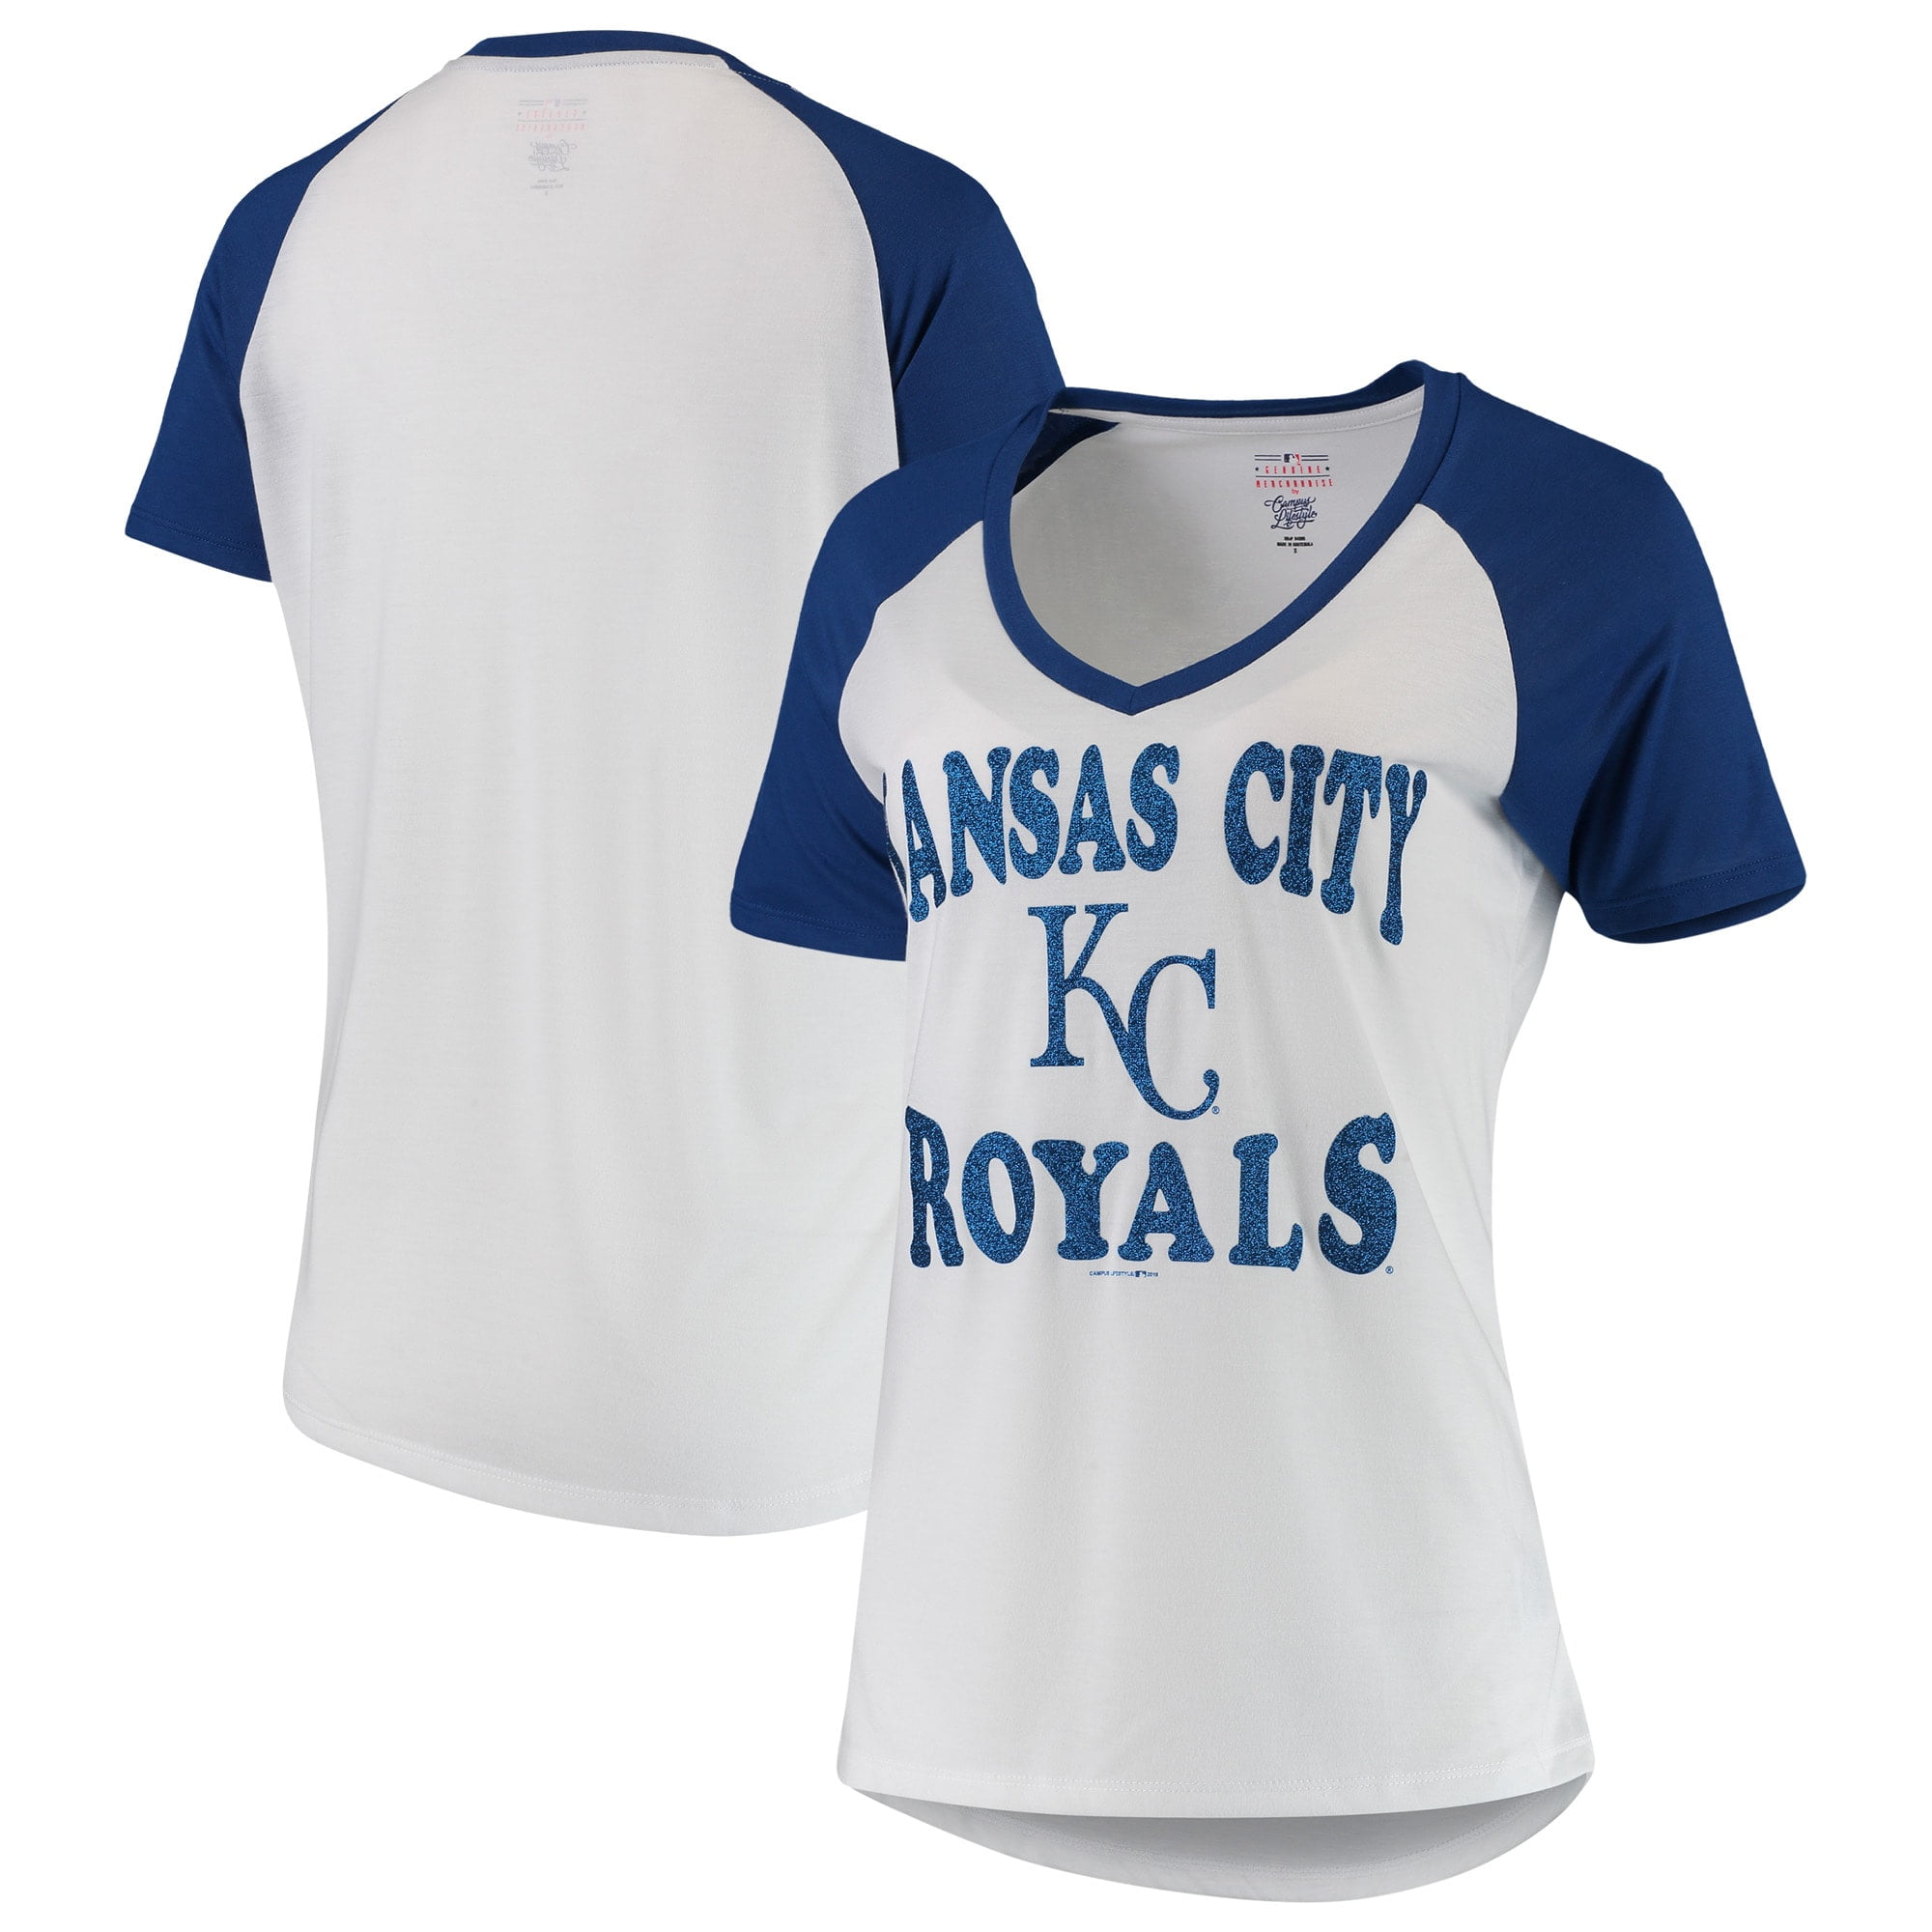 kc royals t shirts cheap